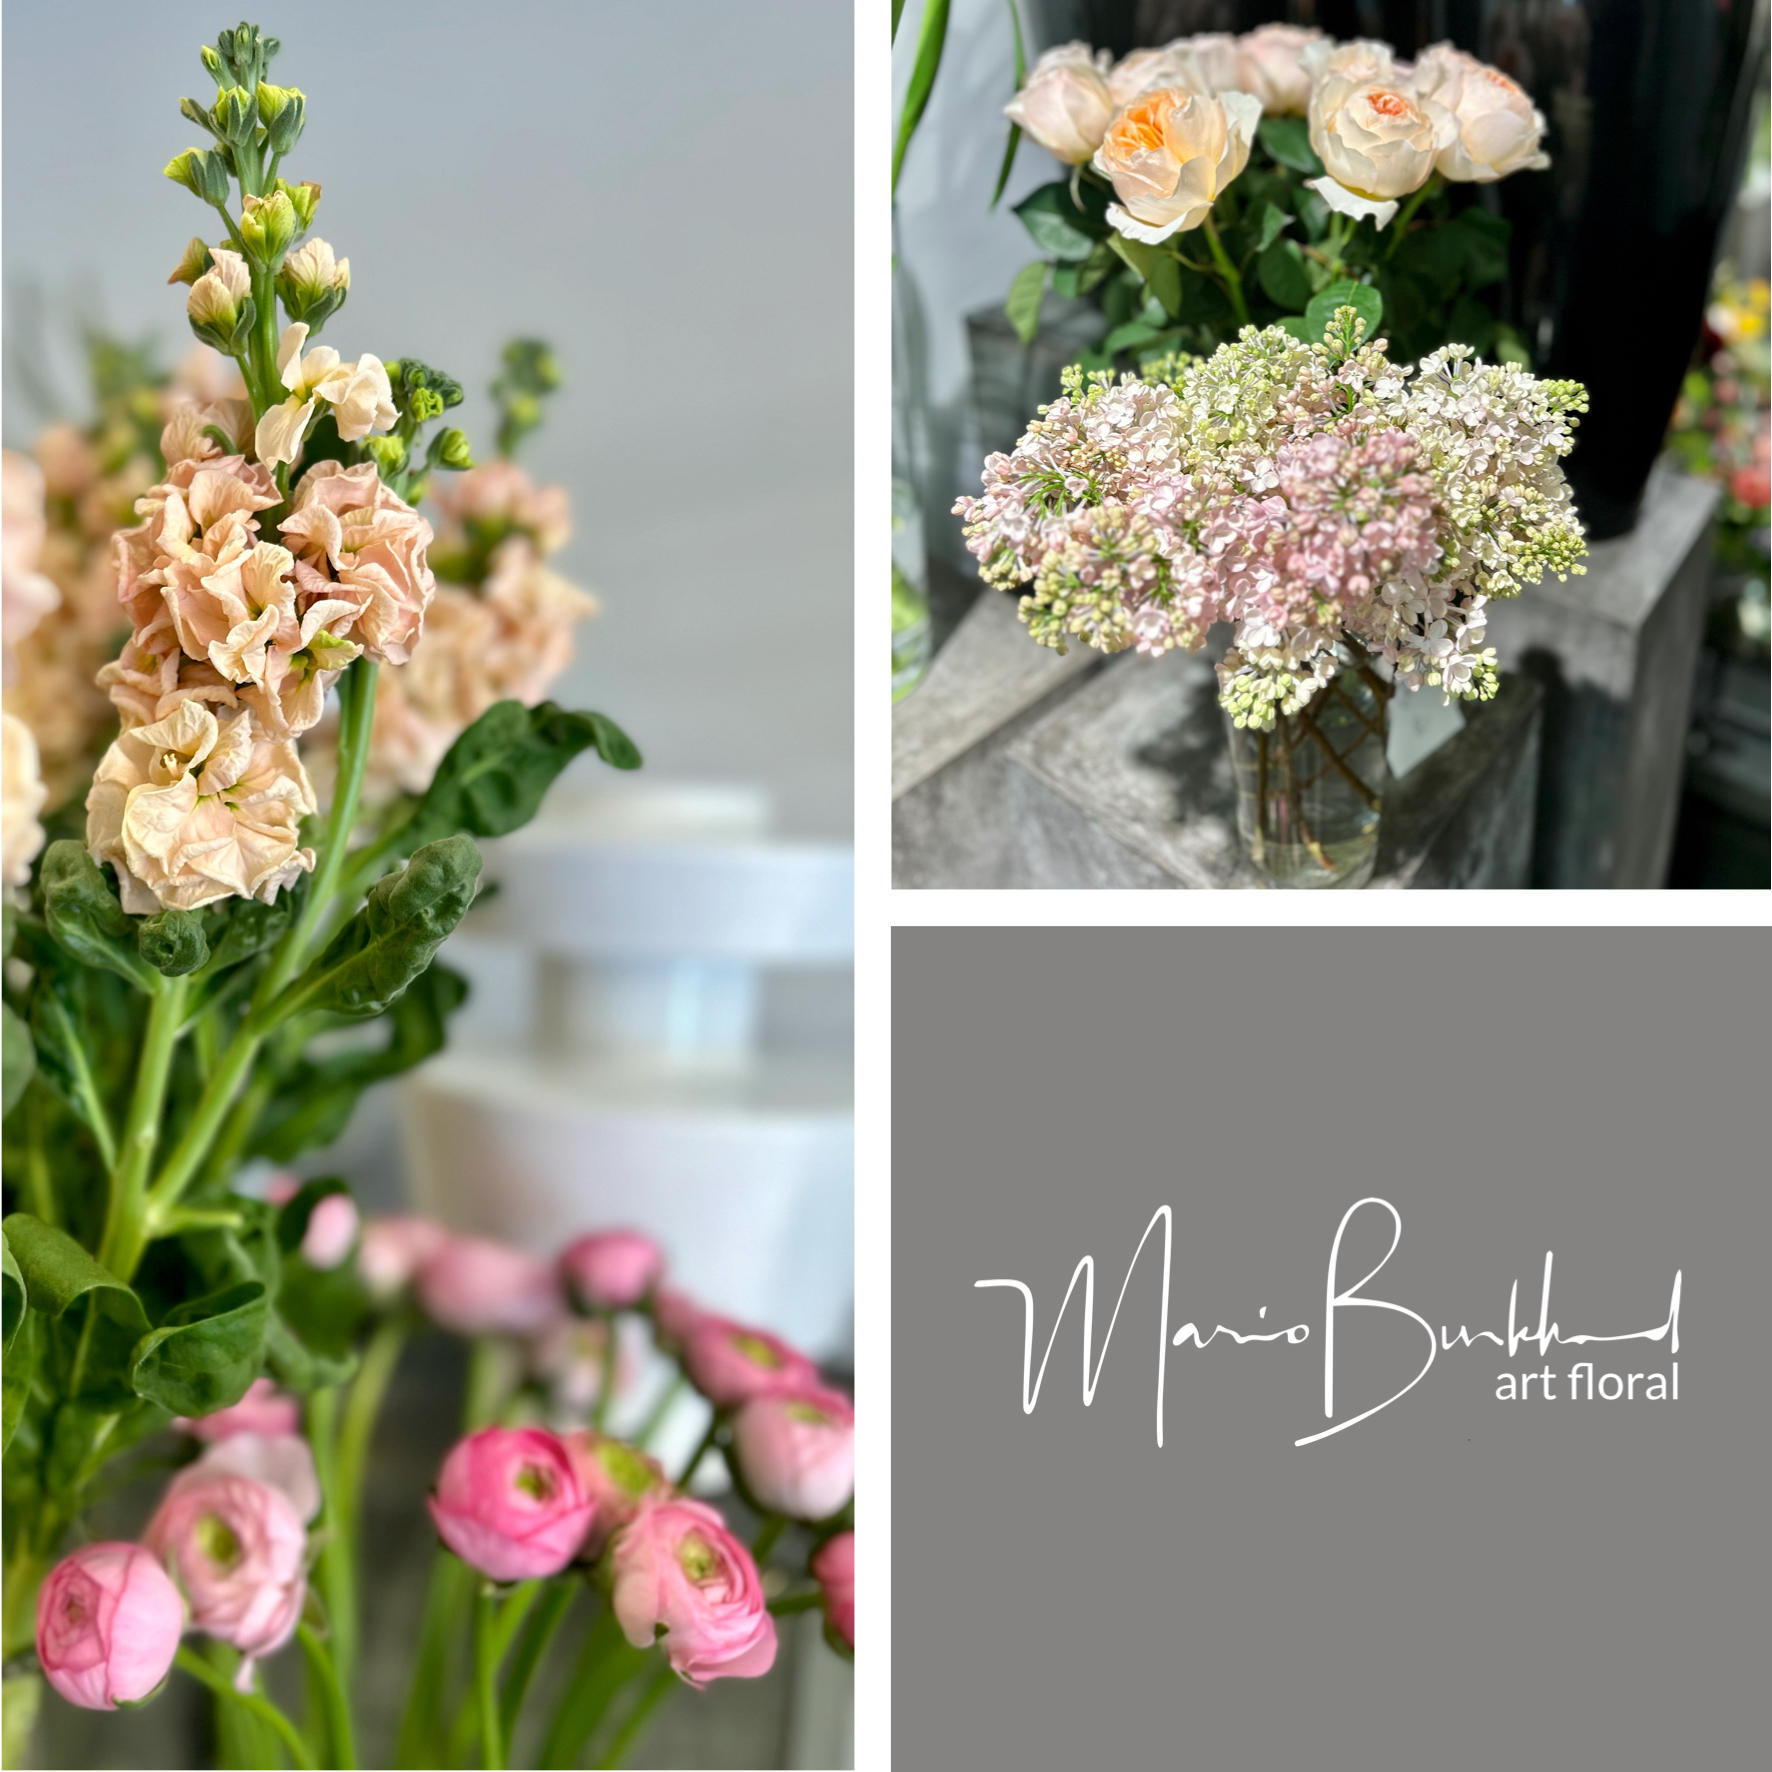 Bilder mario burkhard art floral gmbh